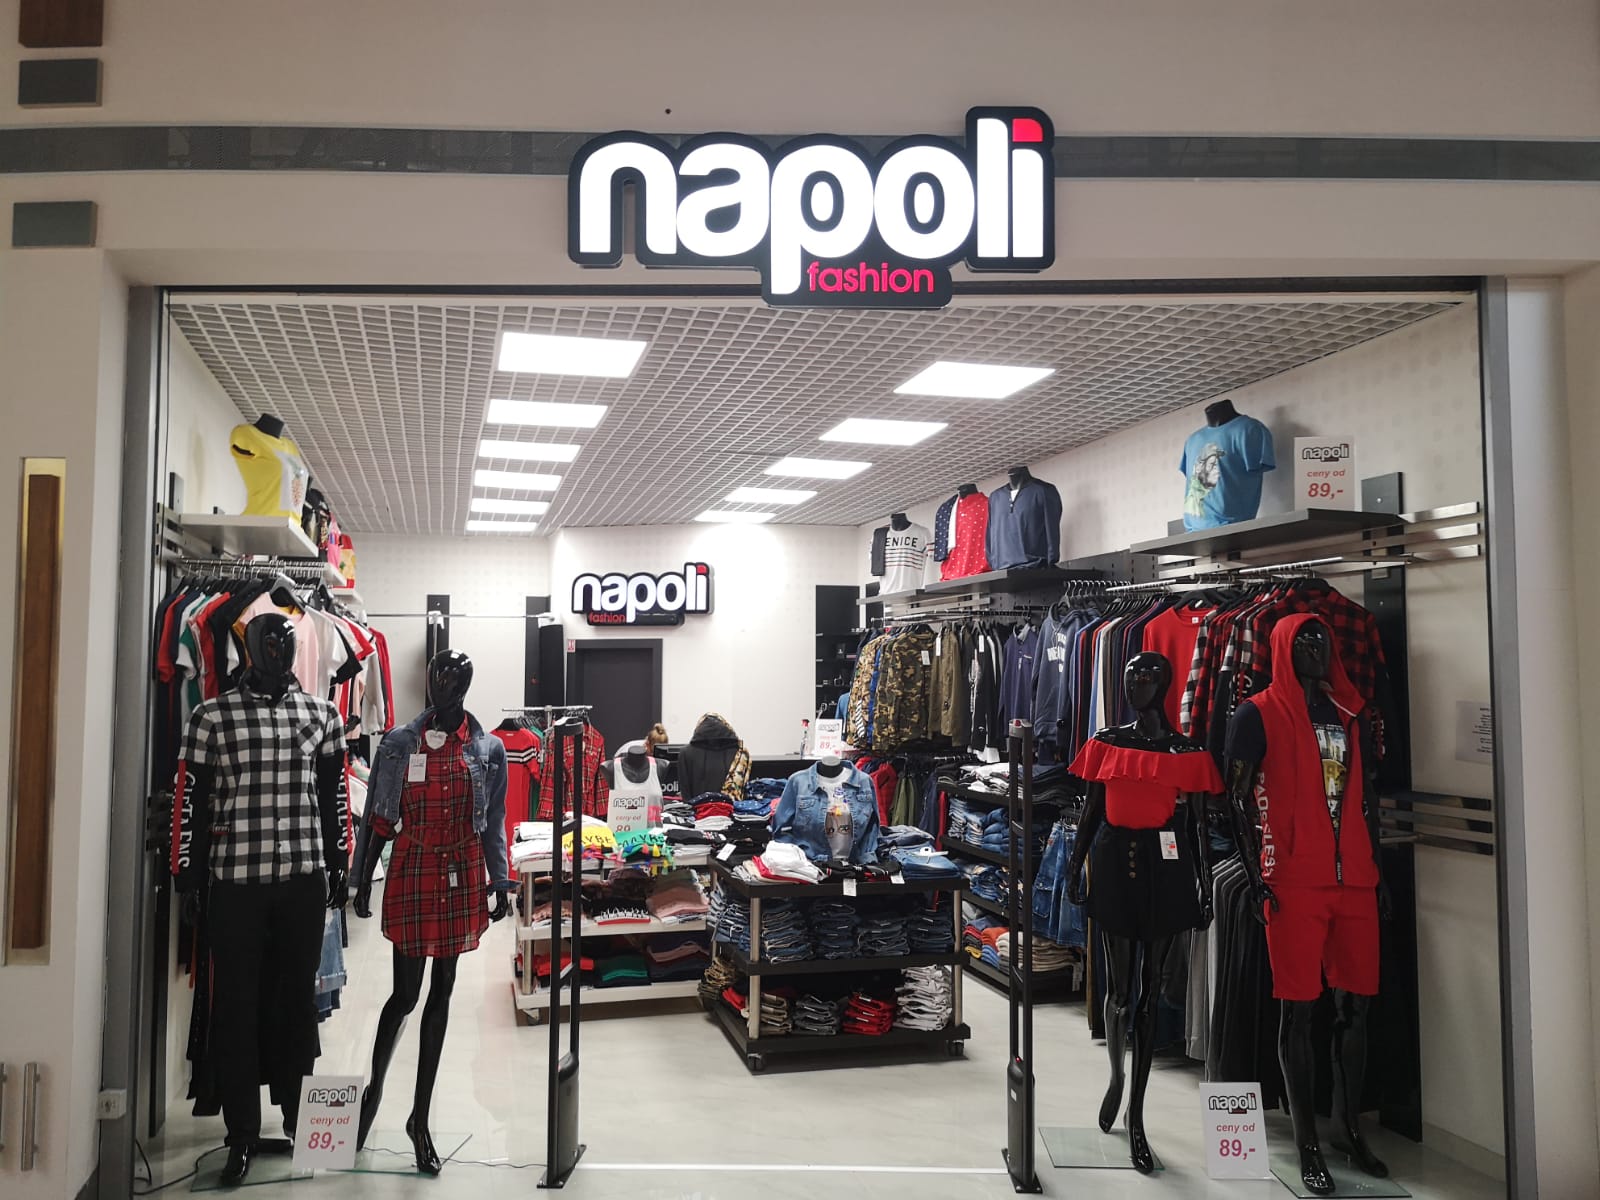 Napoli fashion